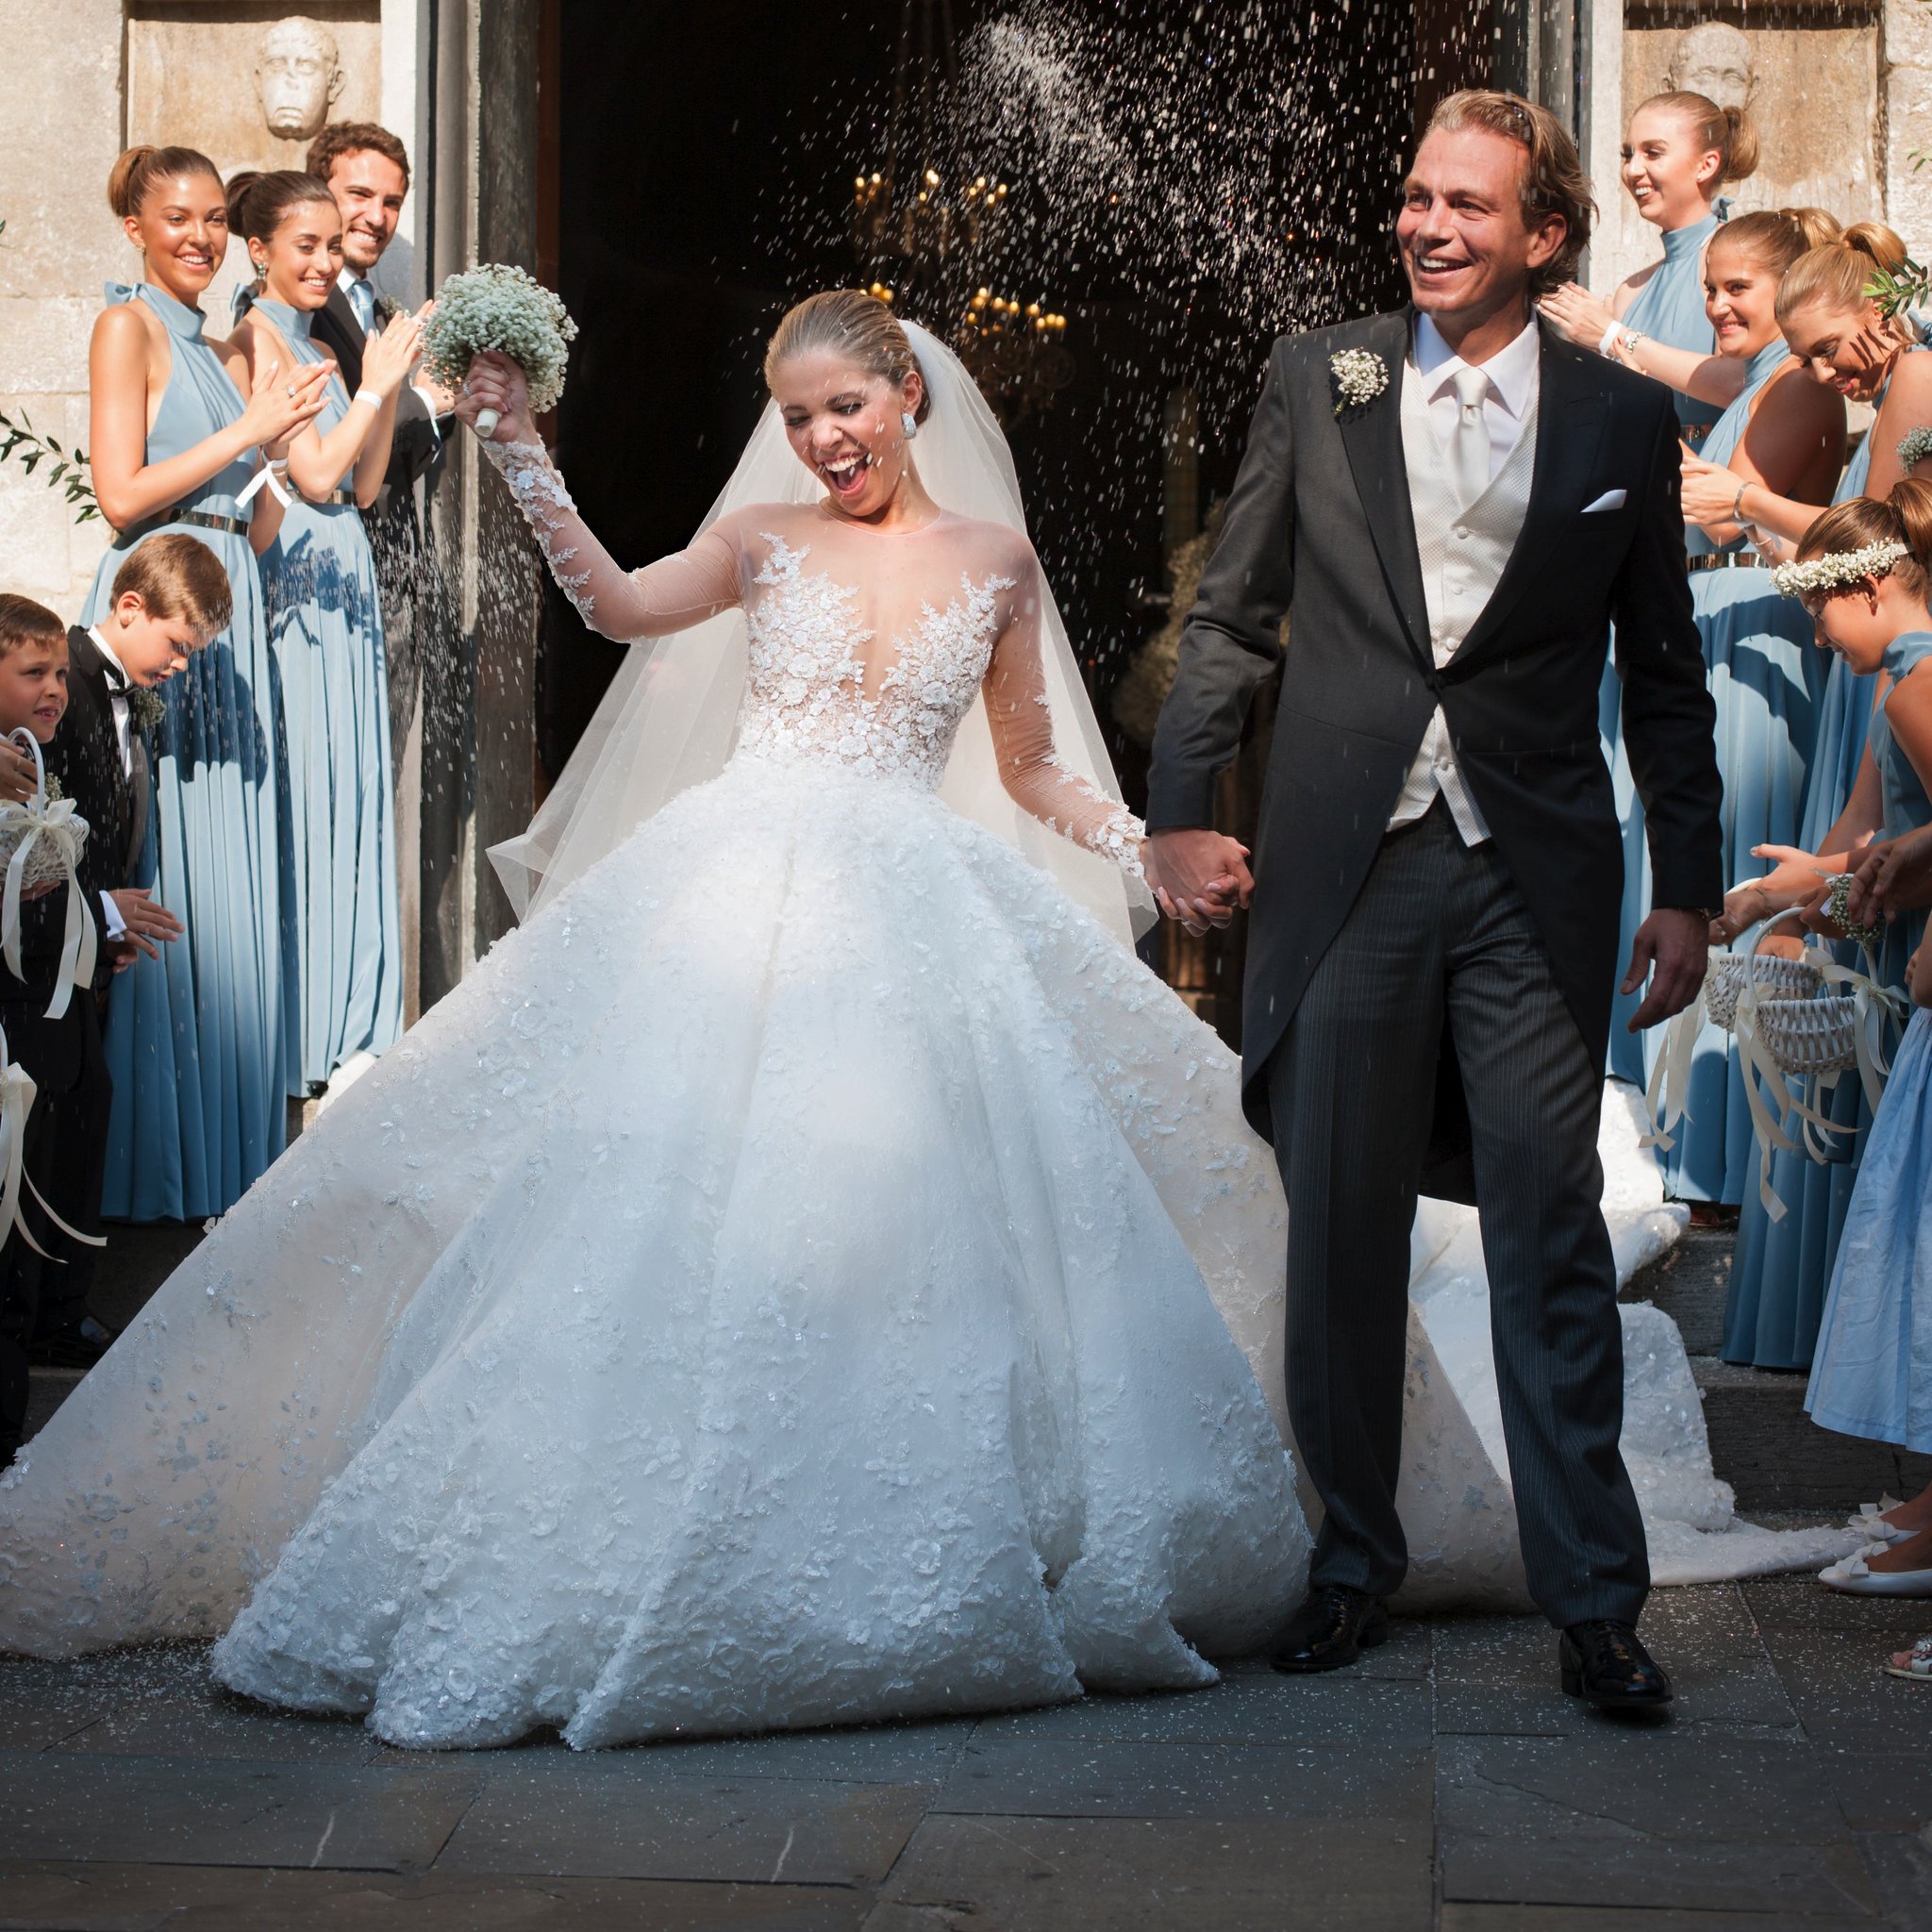 worlds most expensive wedding dress worth 19 million